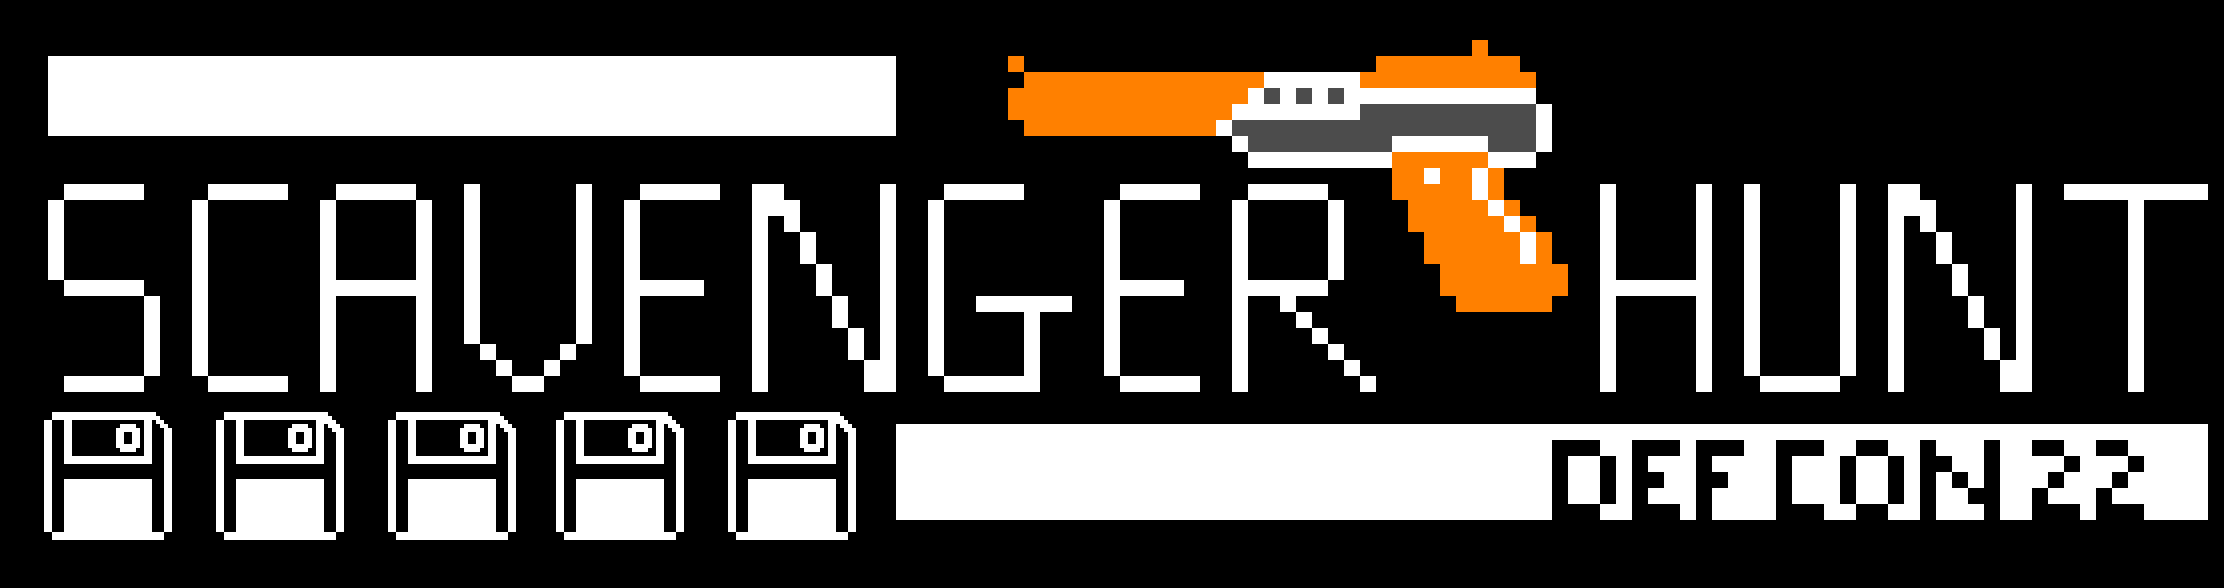 DC22 Scavenger Hunt logo